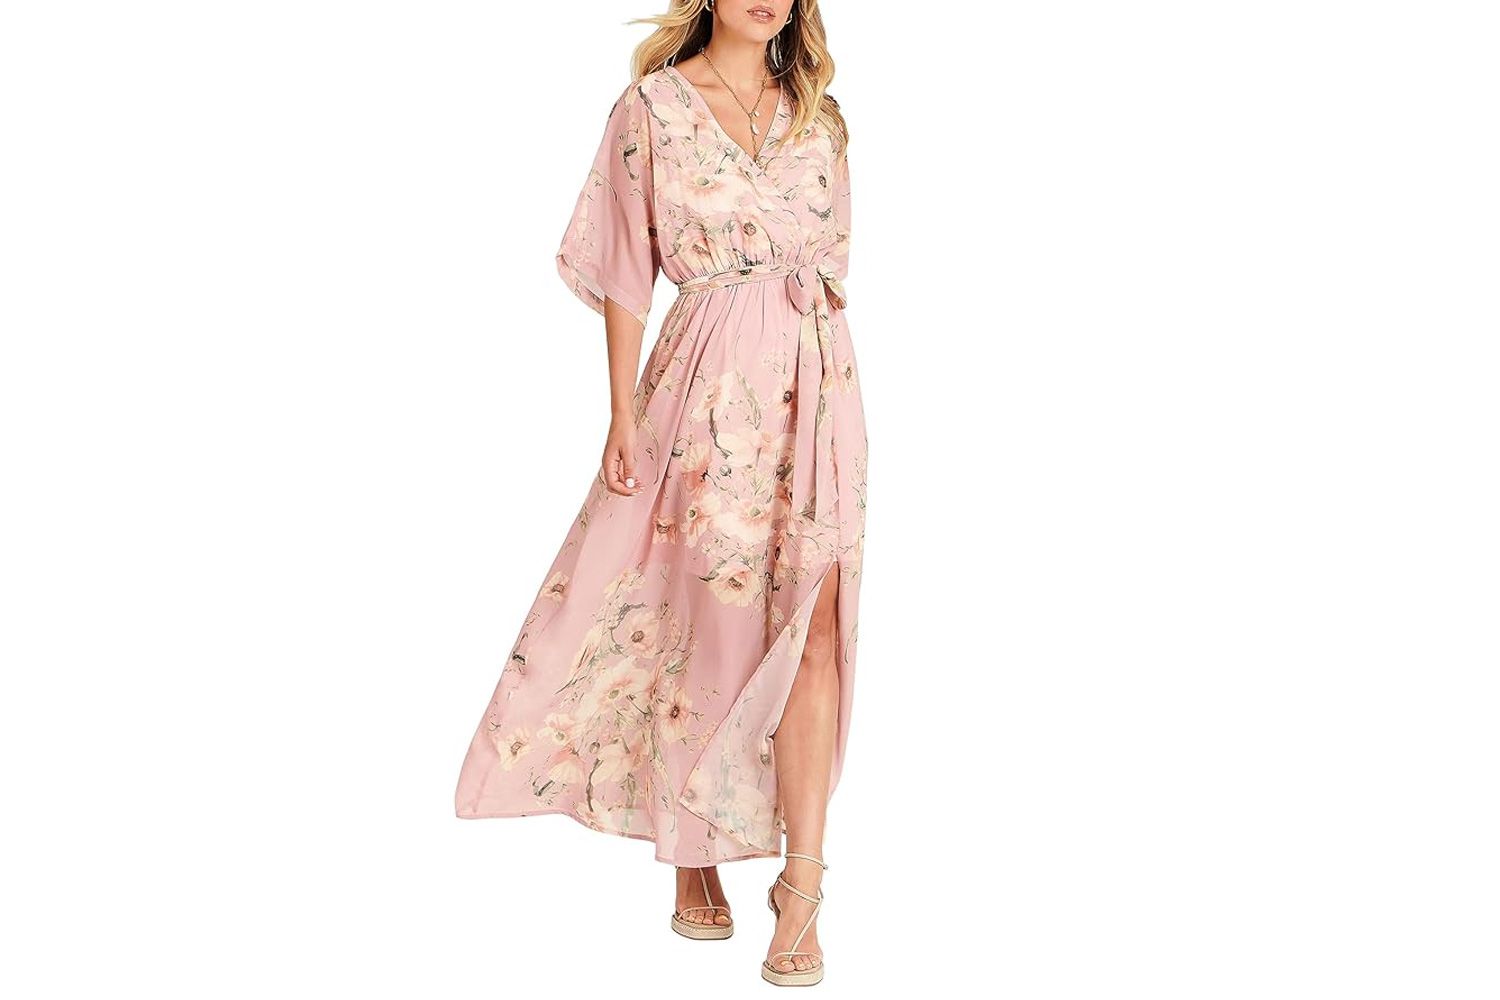 ANRABESS Womenâs Summer Loose Boho Flowy Wrap V Neck 3/4 Sleeve Floral Print Slit Beach Wedding Guest Long Maxi Dress